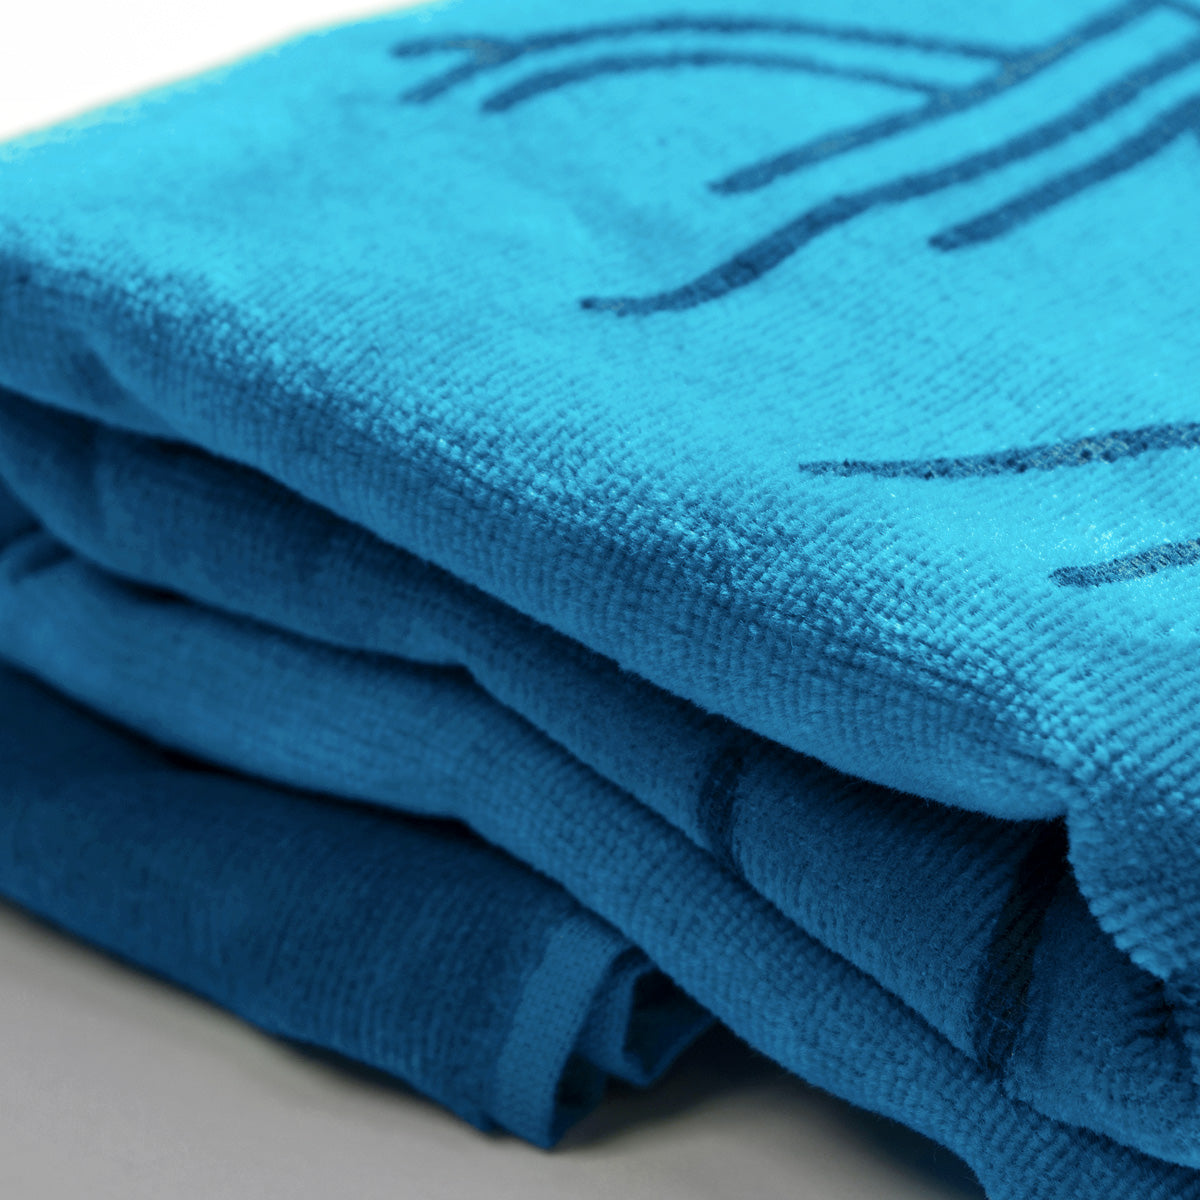 Detailed close up of Oaklandish logo outlines on a folded oversized super plush aqua blue beach towel.